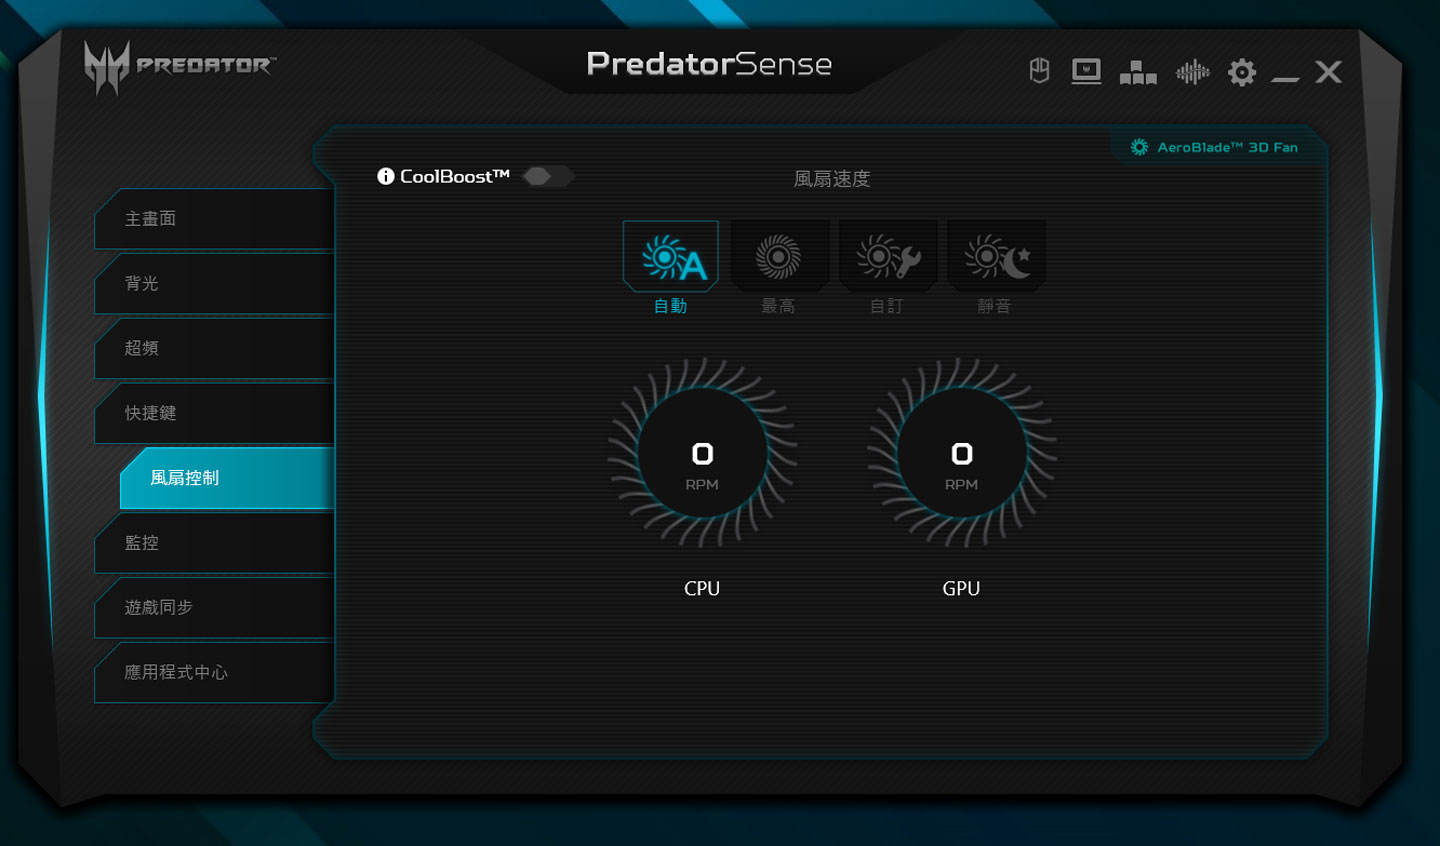 PredatorSense 也有風扇控制功能，可自行切換四個檔位，也能開啟 CoolBoost 的強效散熱功能。